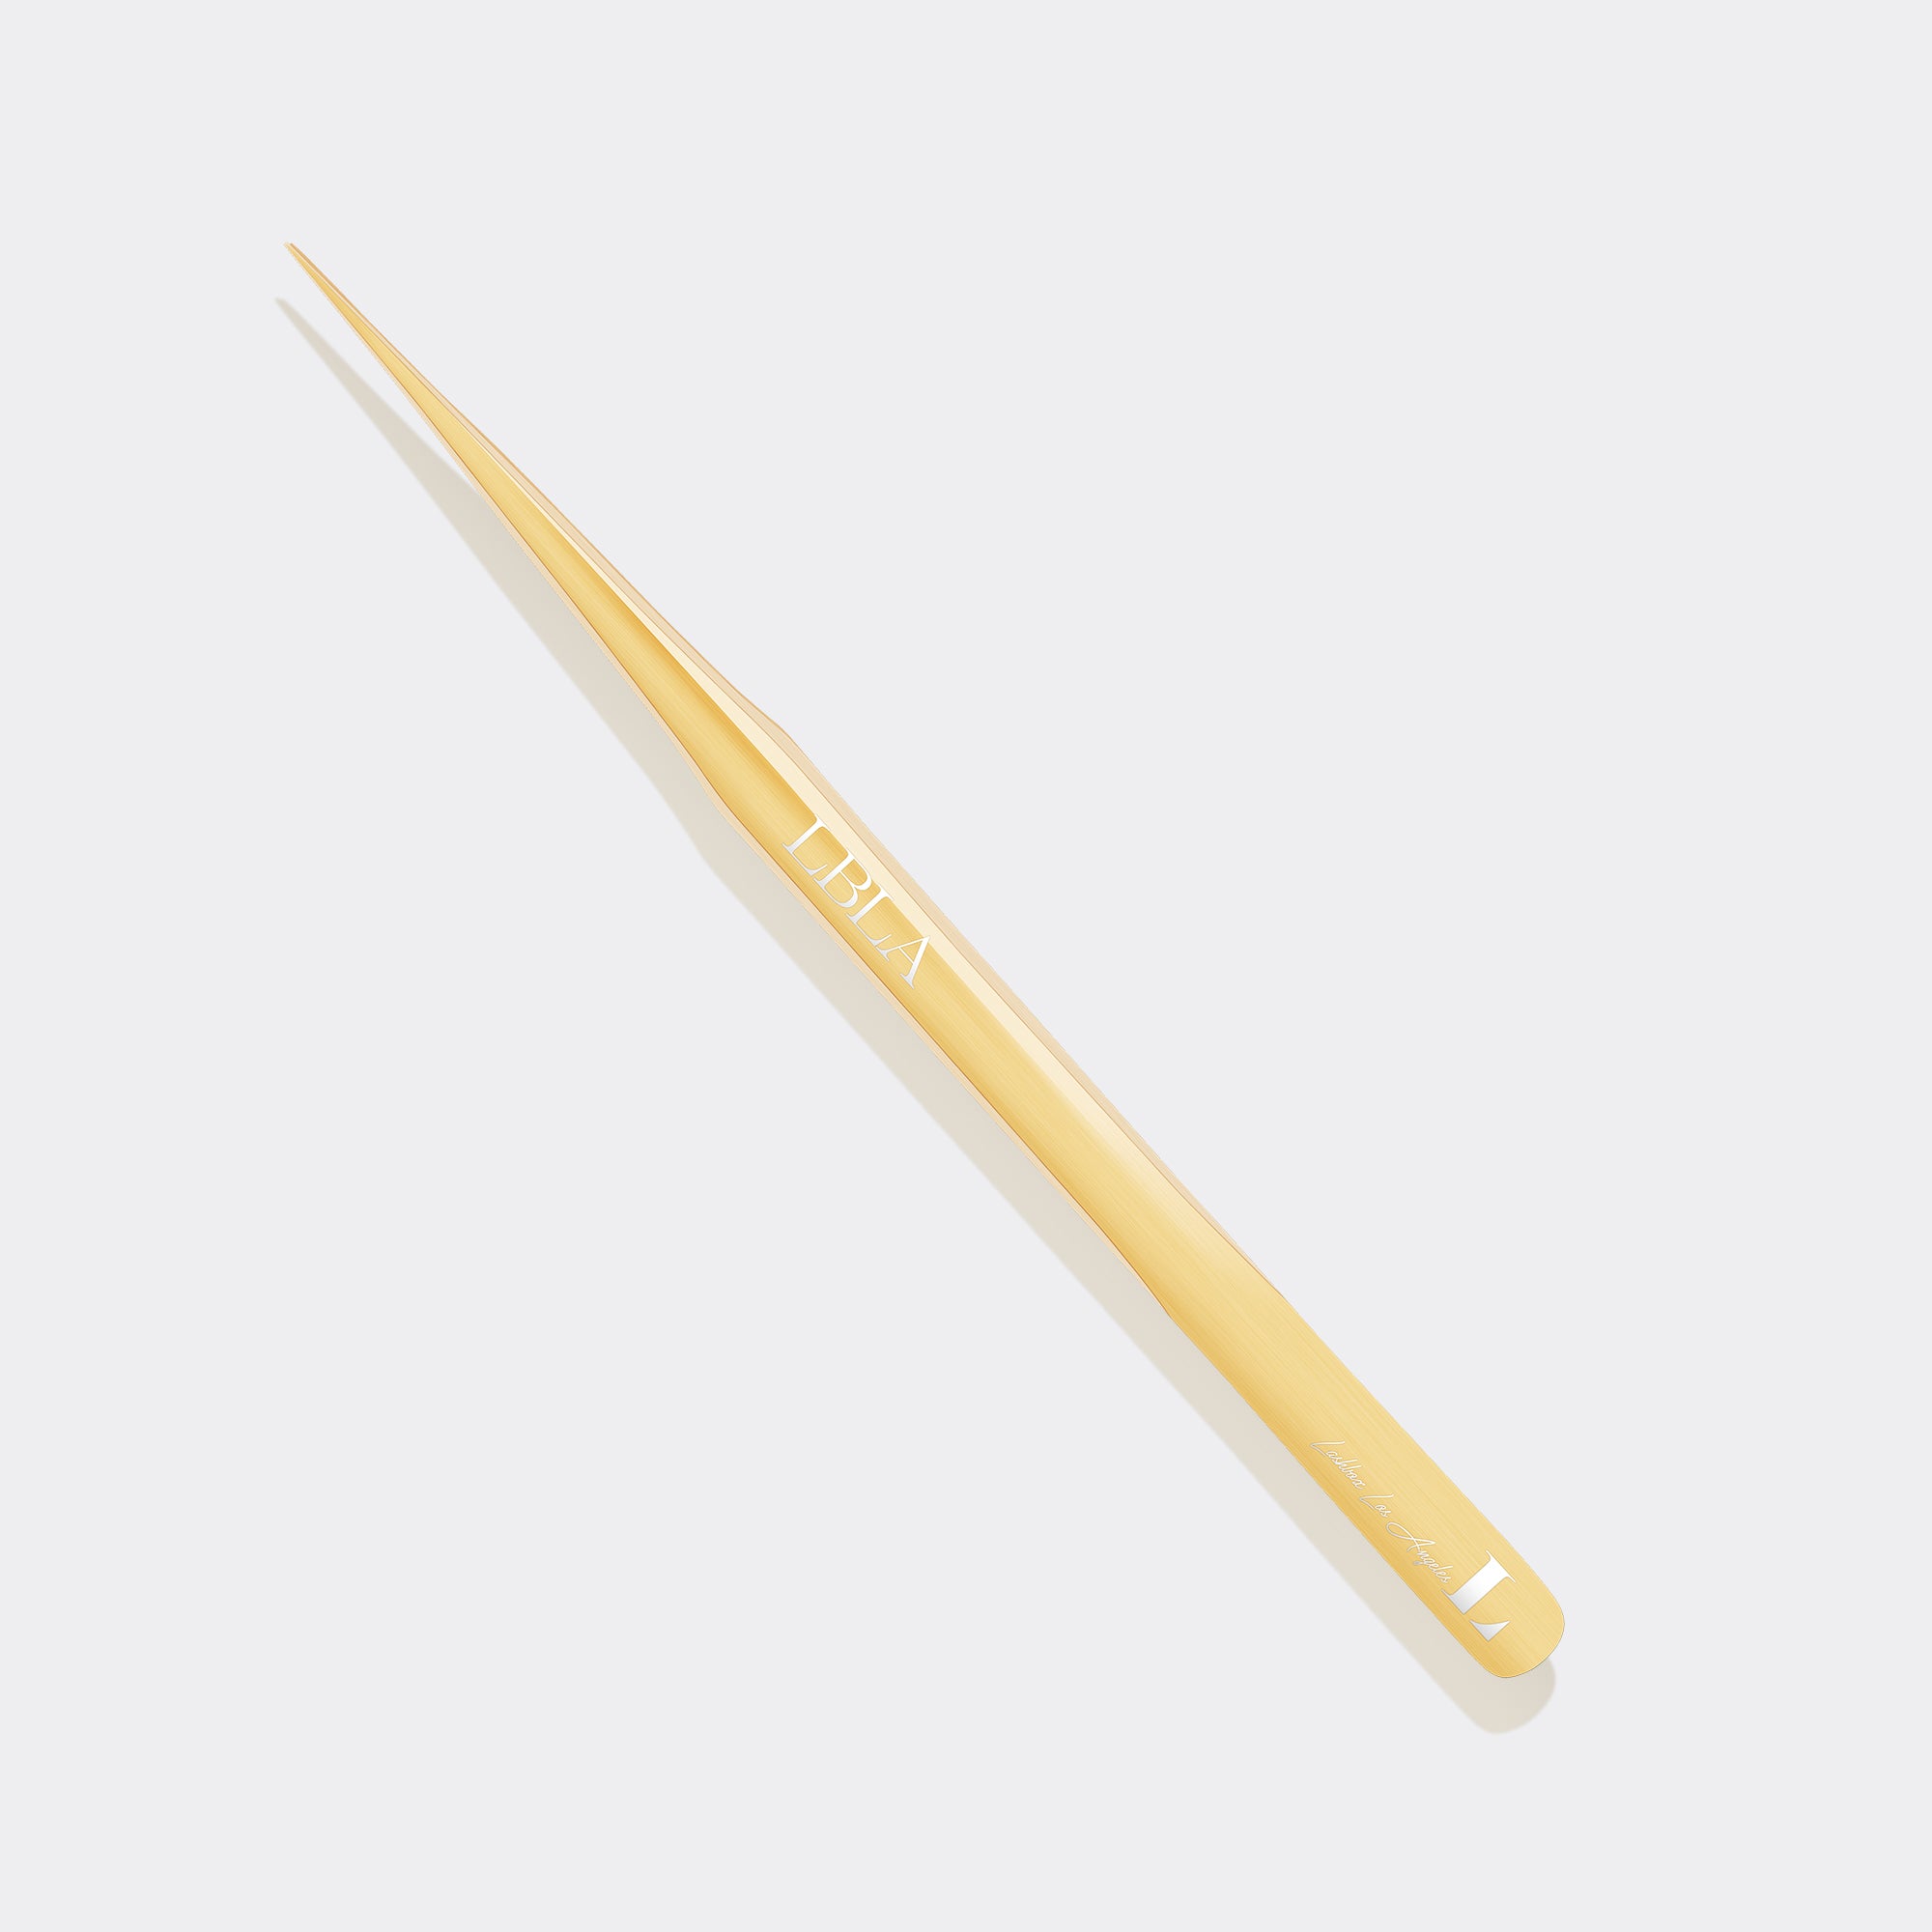 Straight Gold Slim Isolation Tweezer - Long